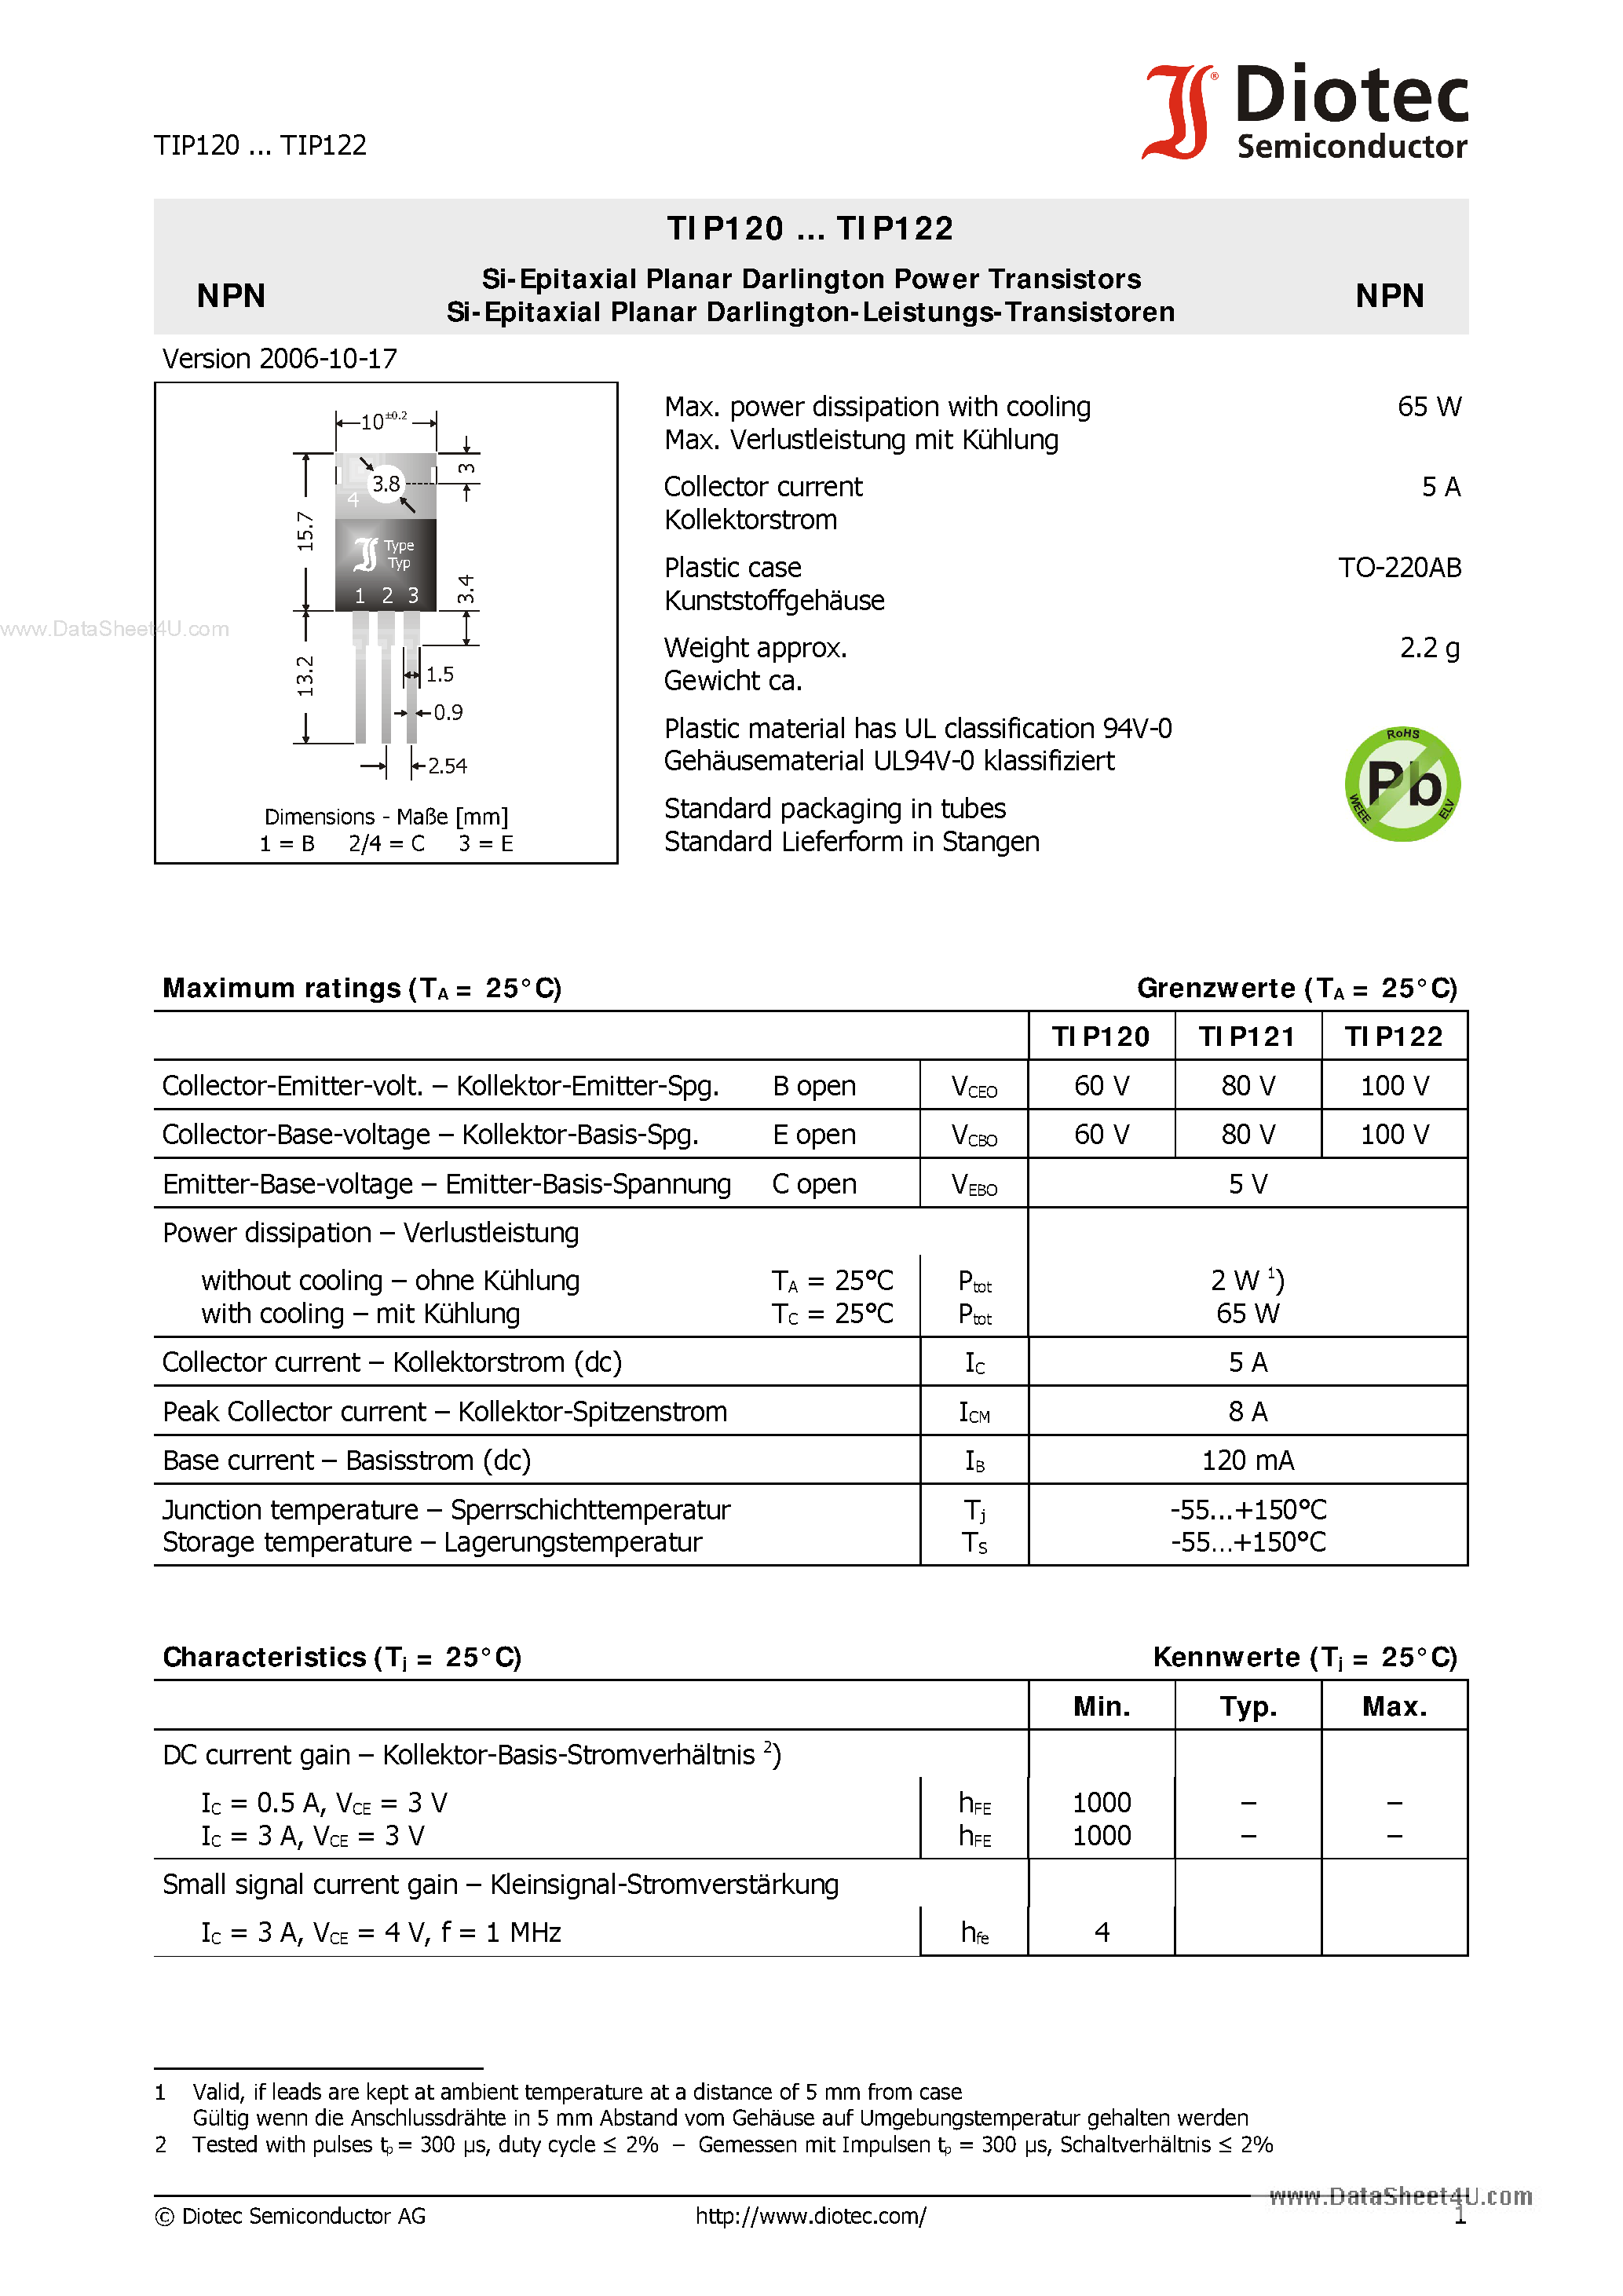 Datasheet TIP120 - (TIP120 - TIP122) Si-Epitaxial Planar Darlington Power Transistors page 1